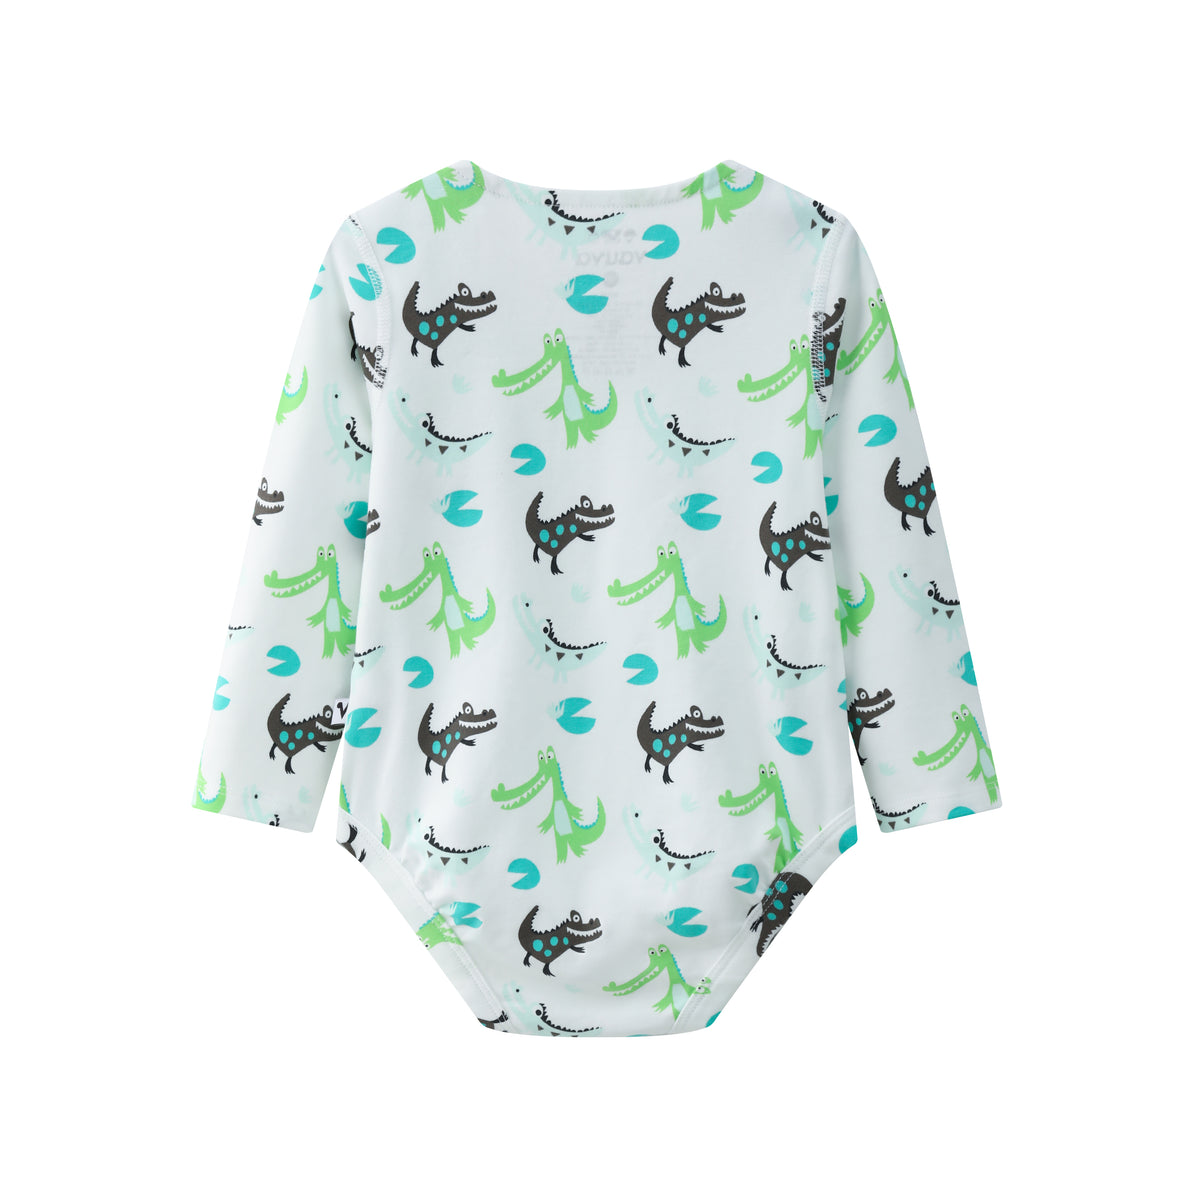 Vauva BBNS - Organic Cotton Crocodile Print Square Neck Long-Sleeved Bodysuits (2-pack)